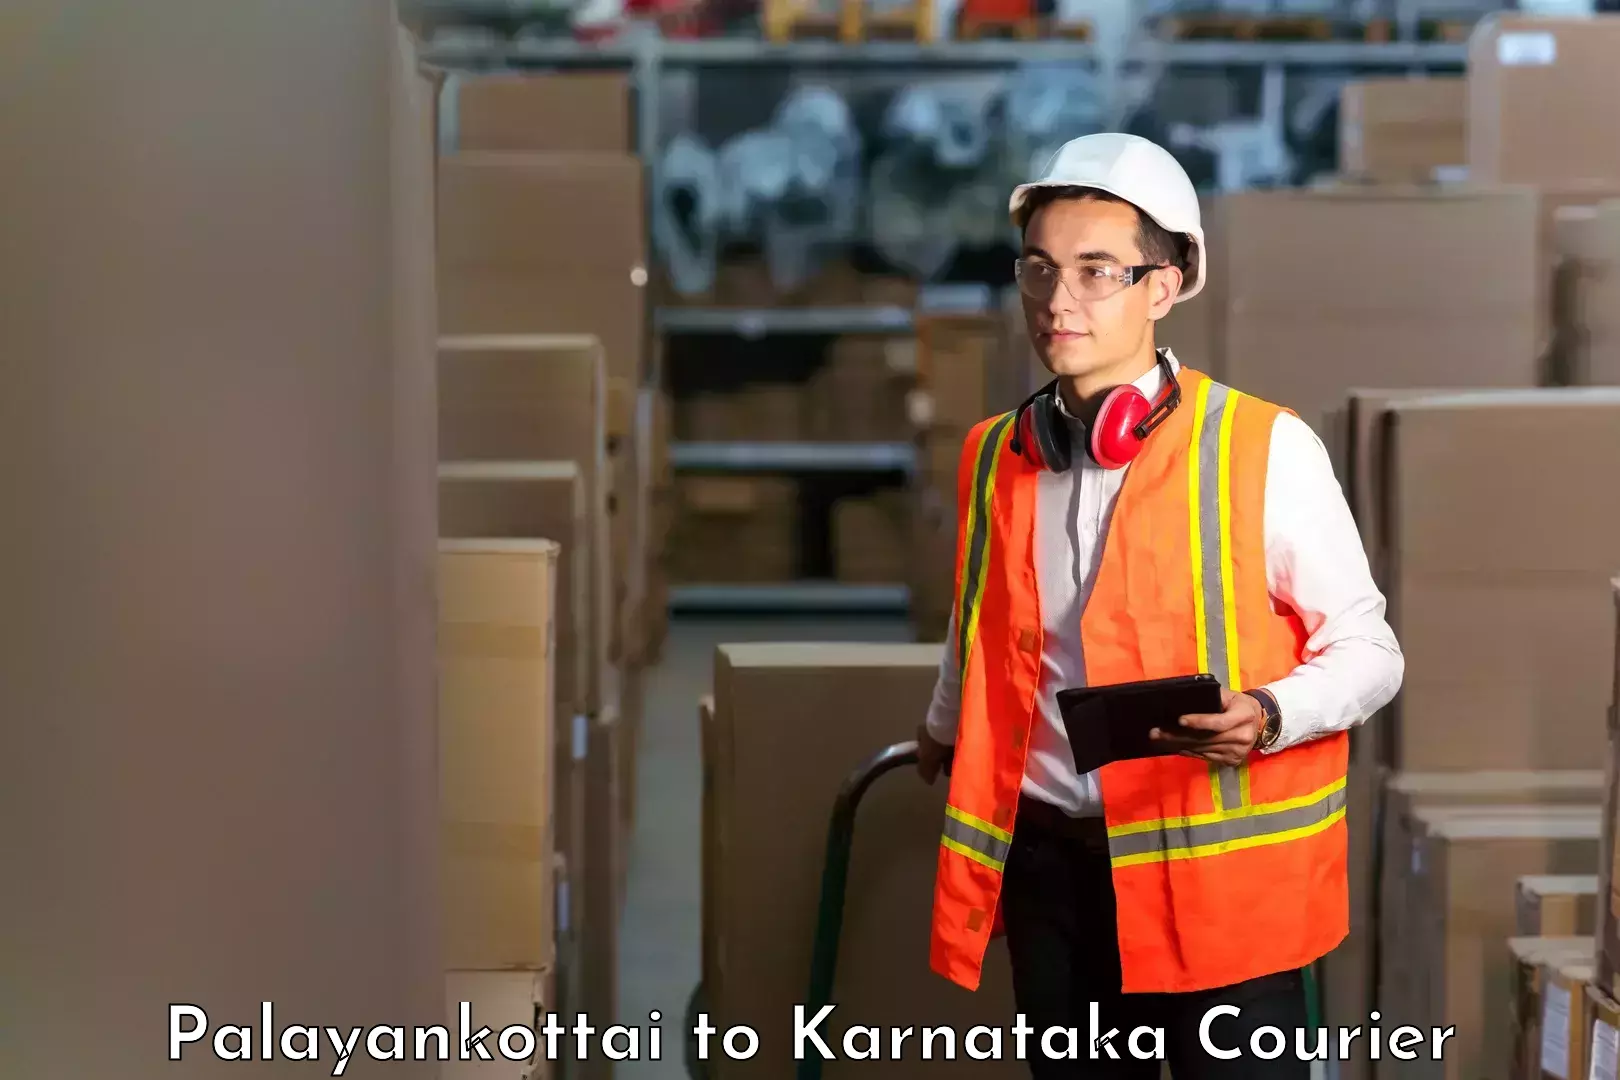 Efficient cargo handling Palayankottai to Karnataka